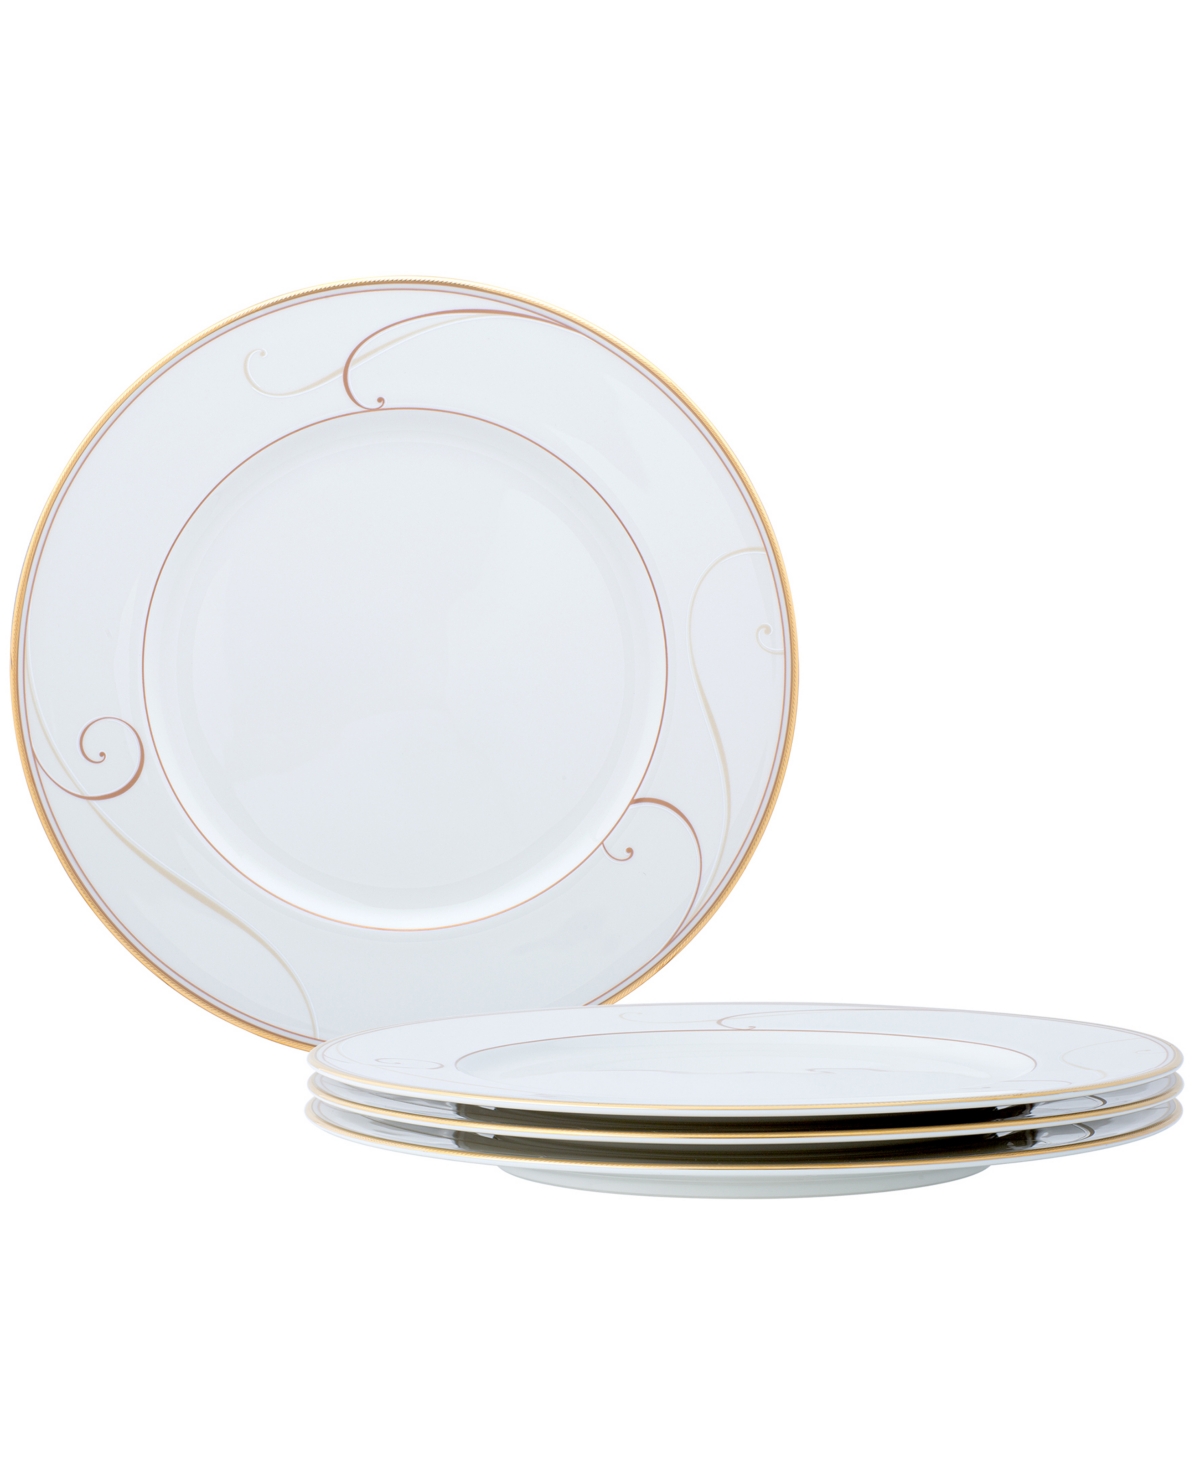 Noritake Golden Wave Set Of 4 Dinner Plates, Service For 4 In White